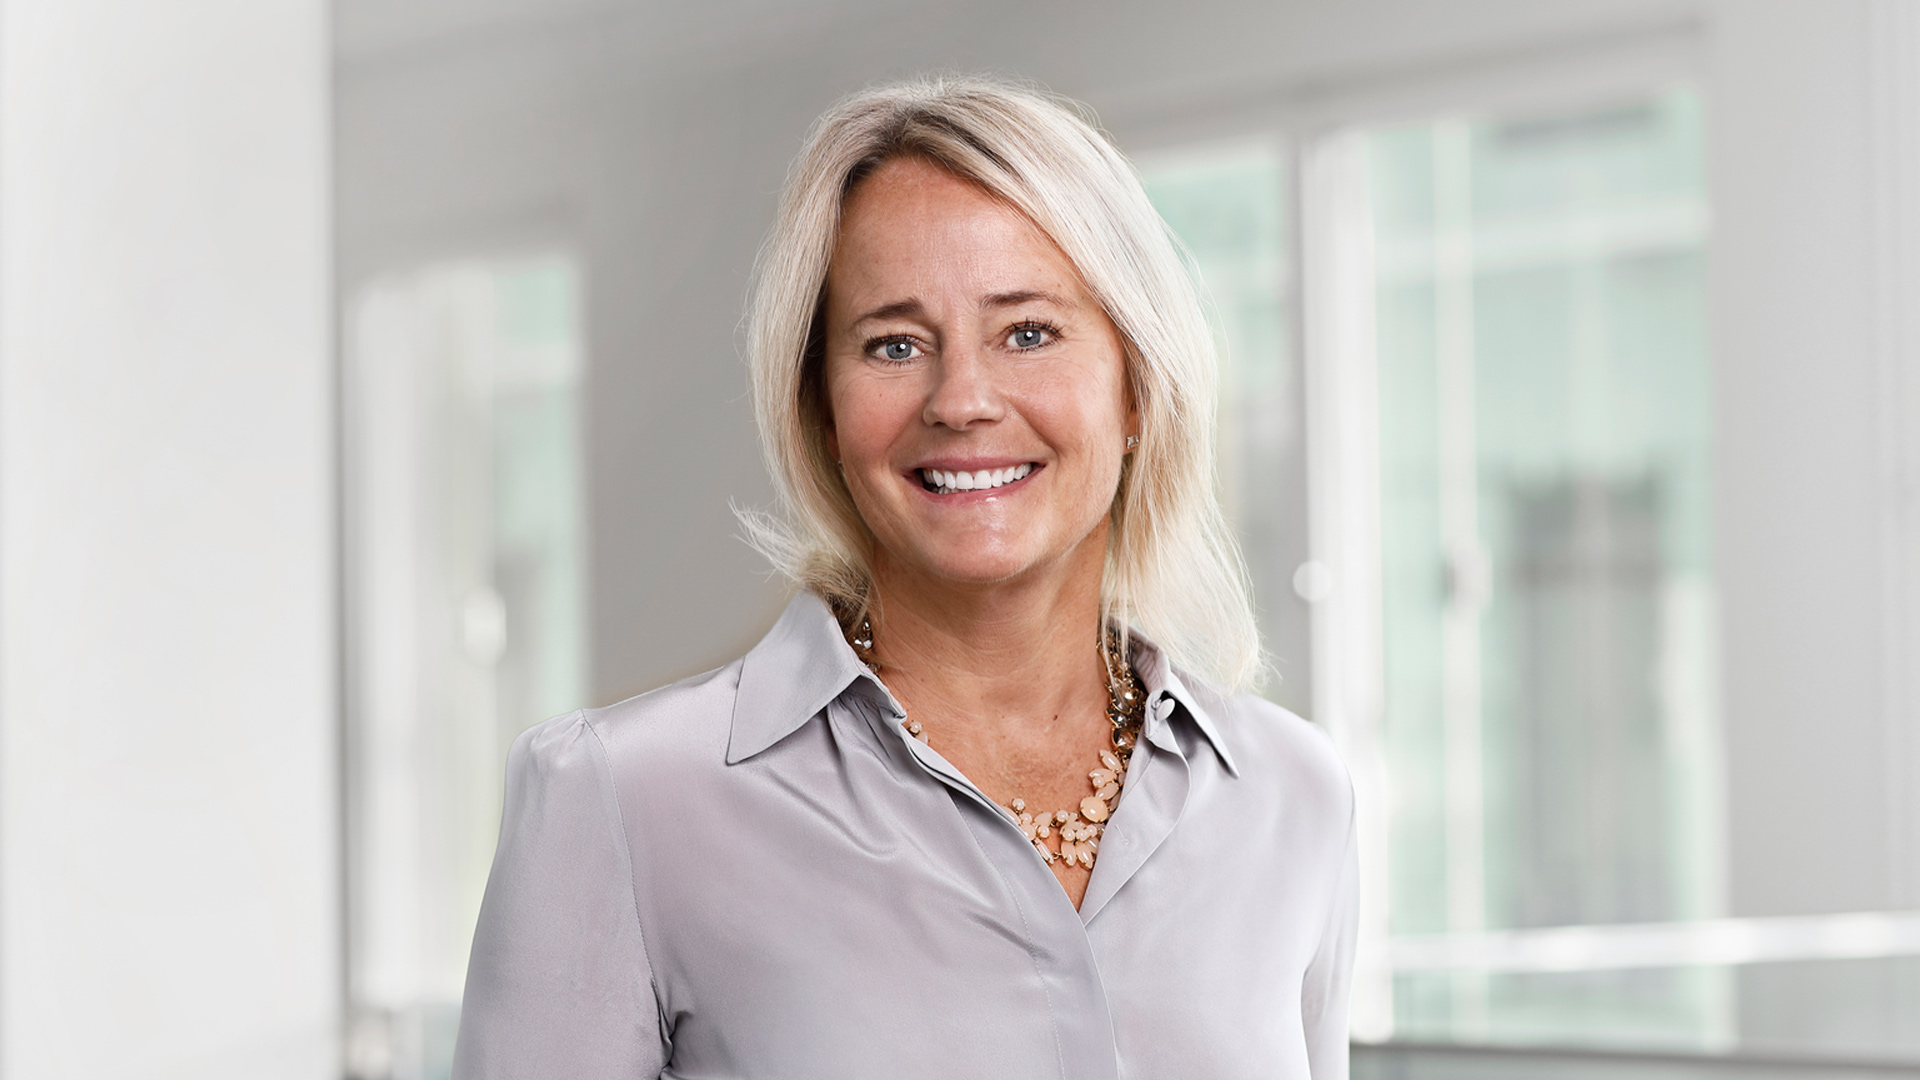 Karin Lepasoon, Vattenfall's Head of Communications 2016-2020